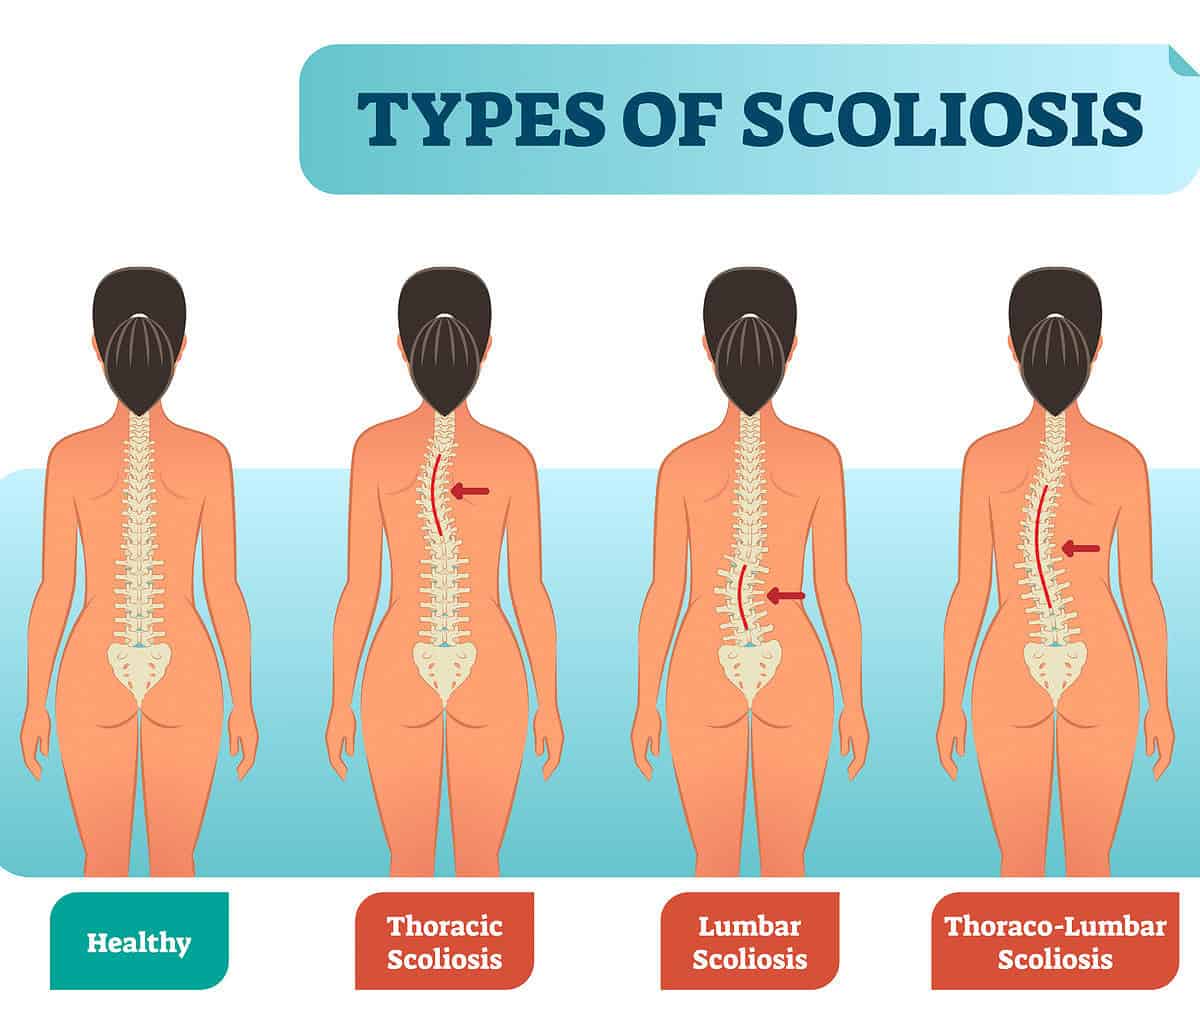 Yoga for Scoliosis